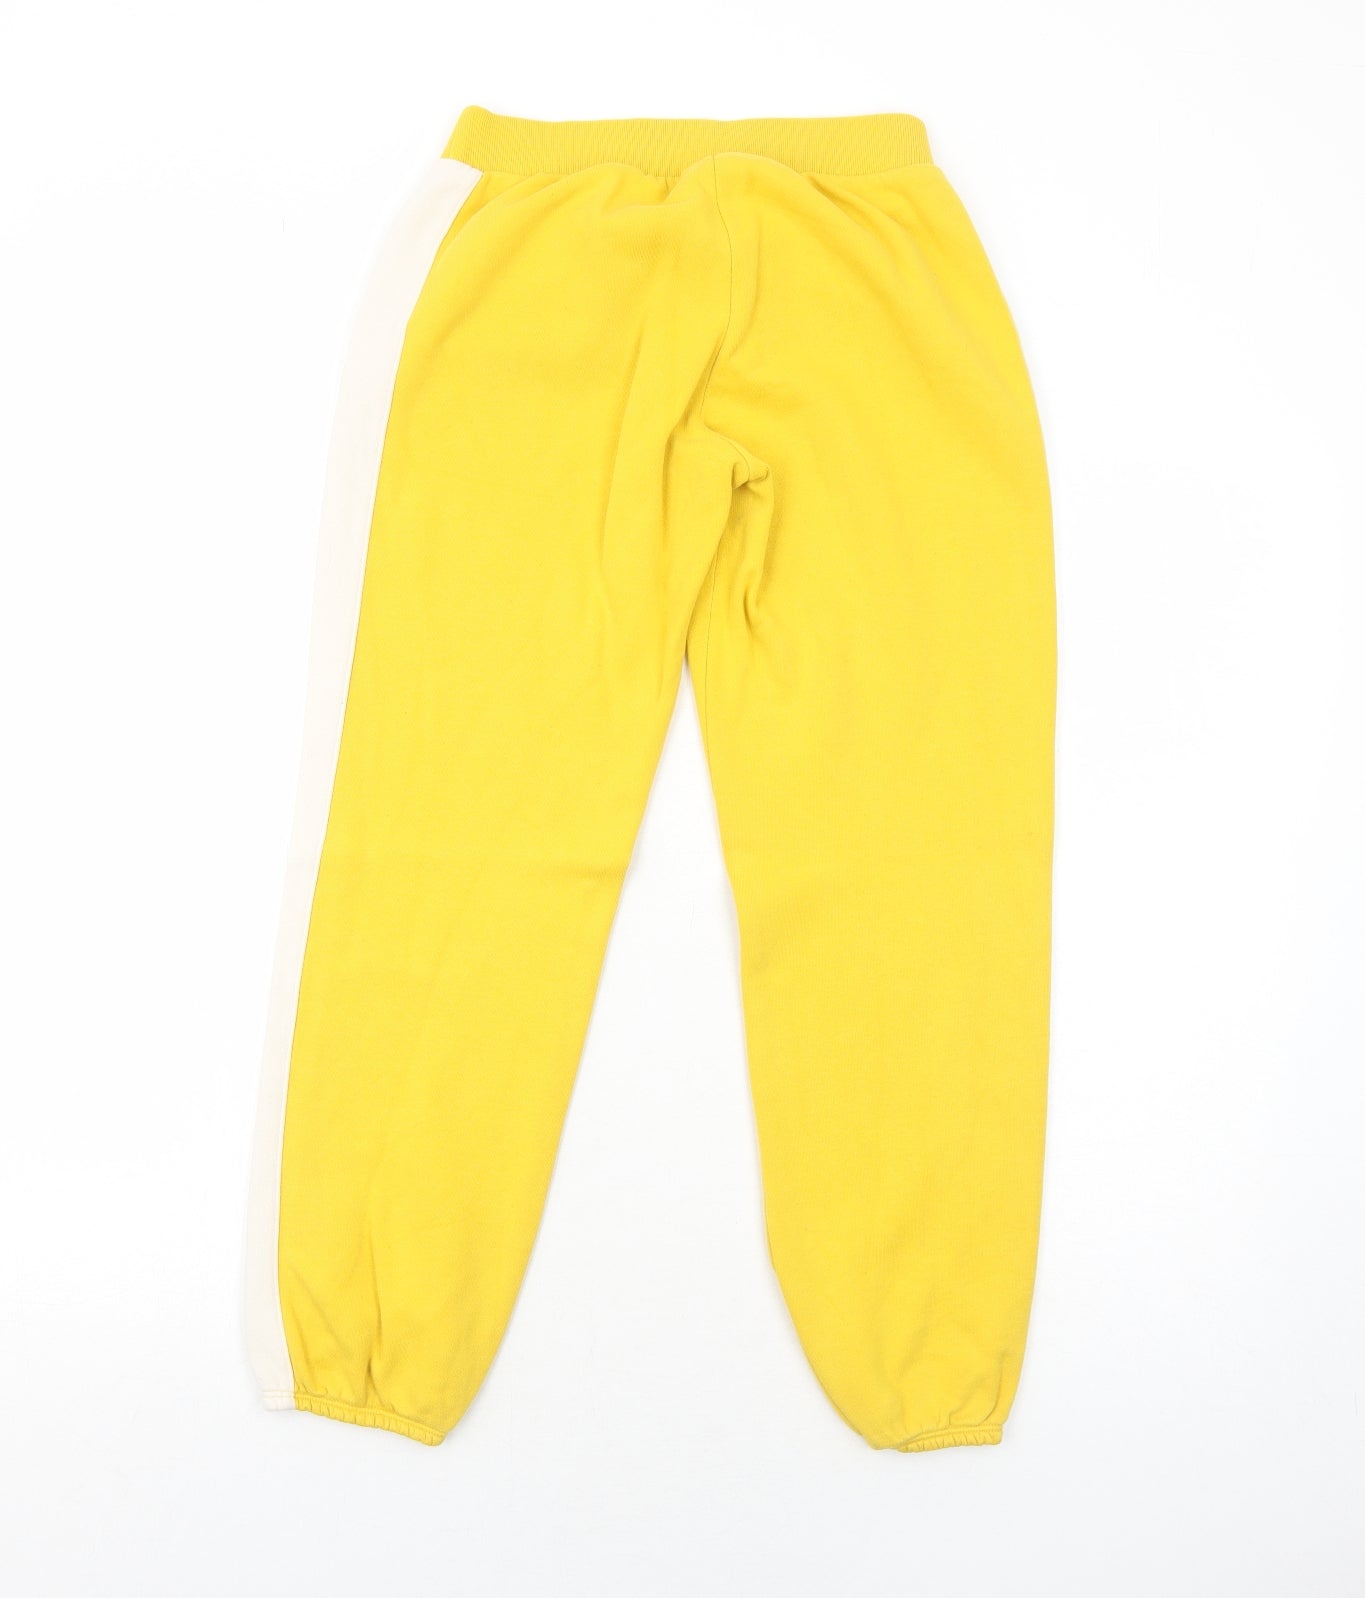 Gap Girls Yellow Striped Cotton Jogger Trousers Size 12 Years Regular Drawstring